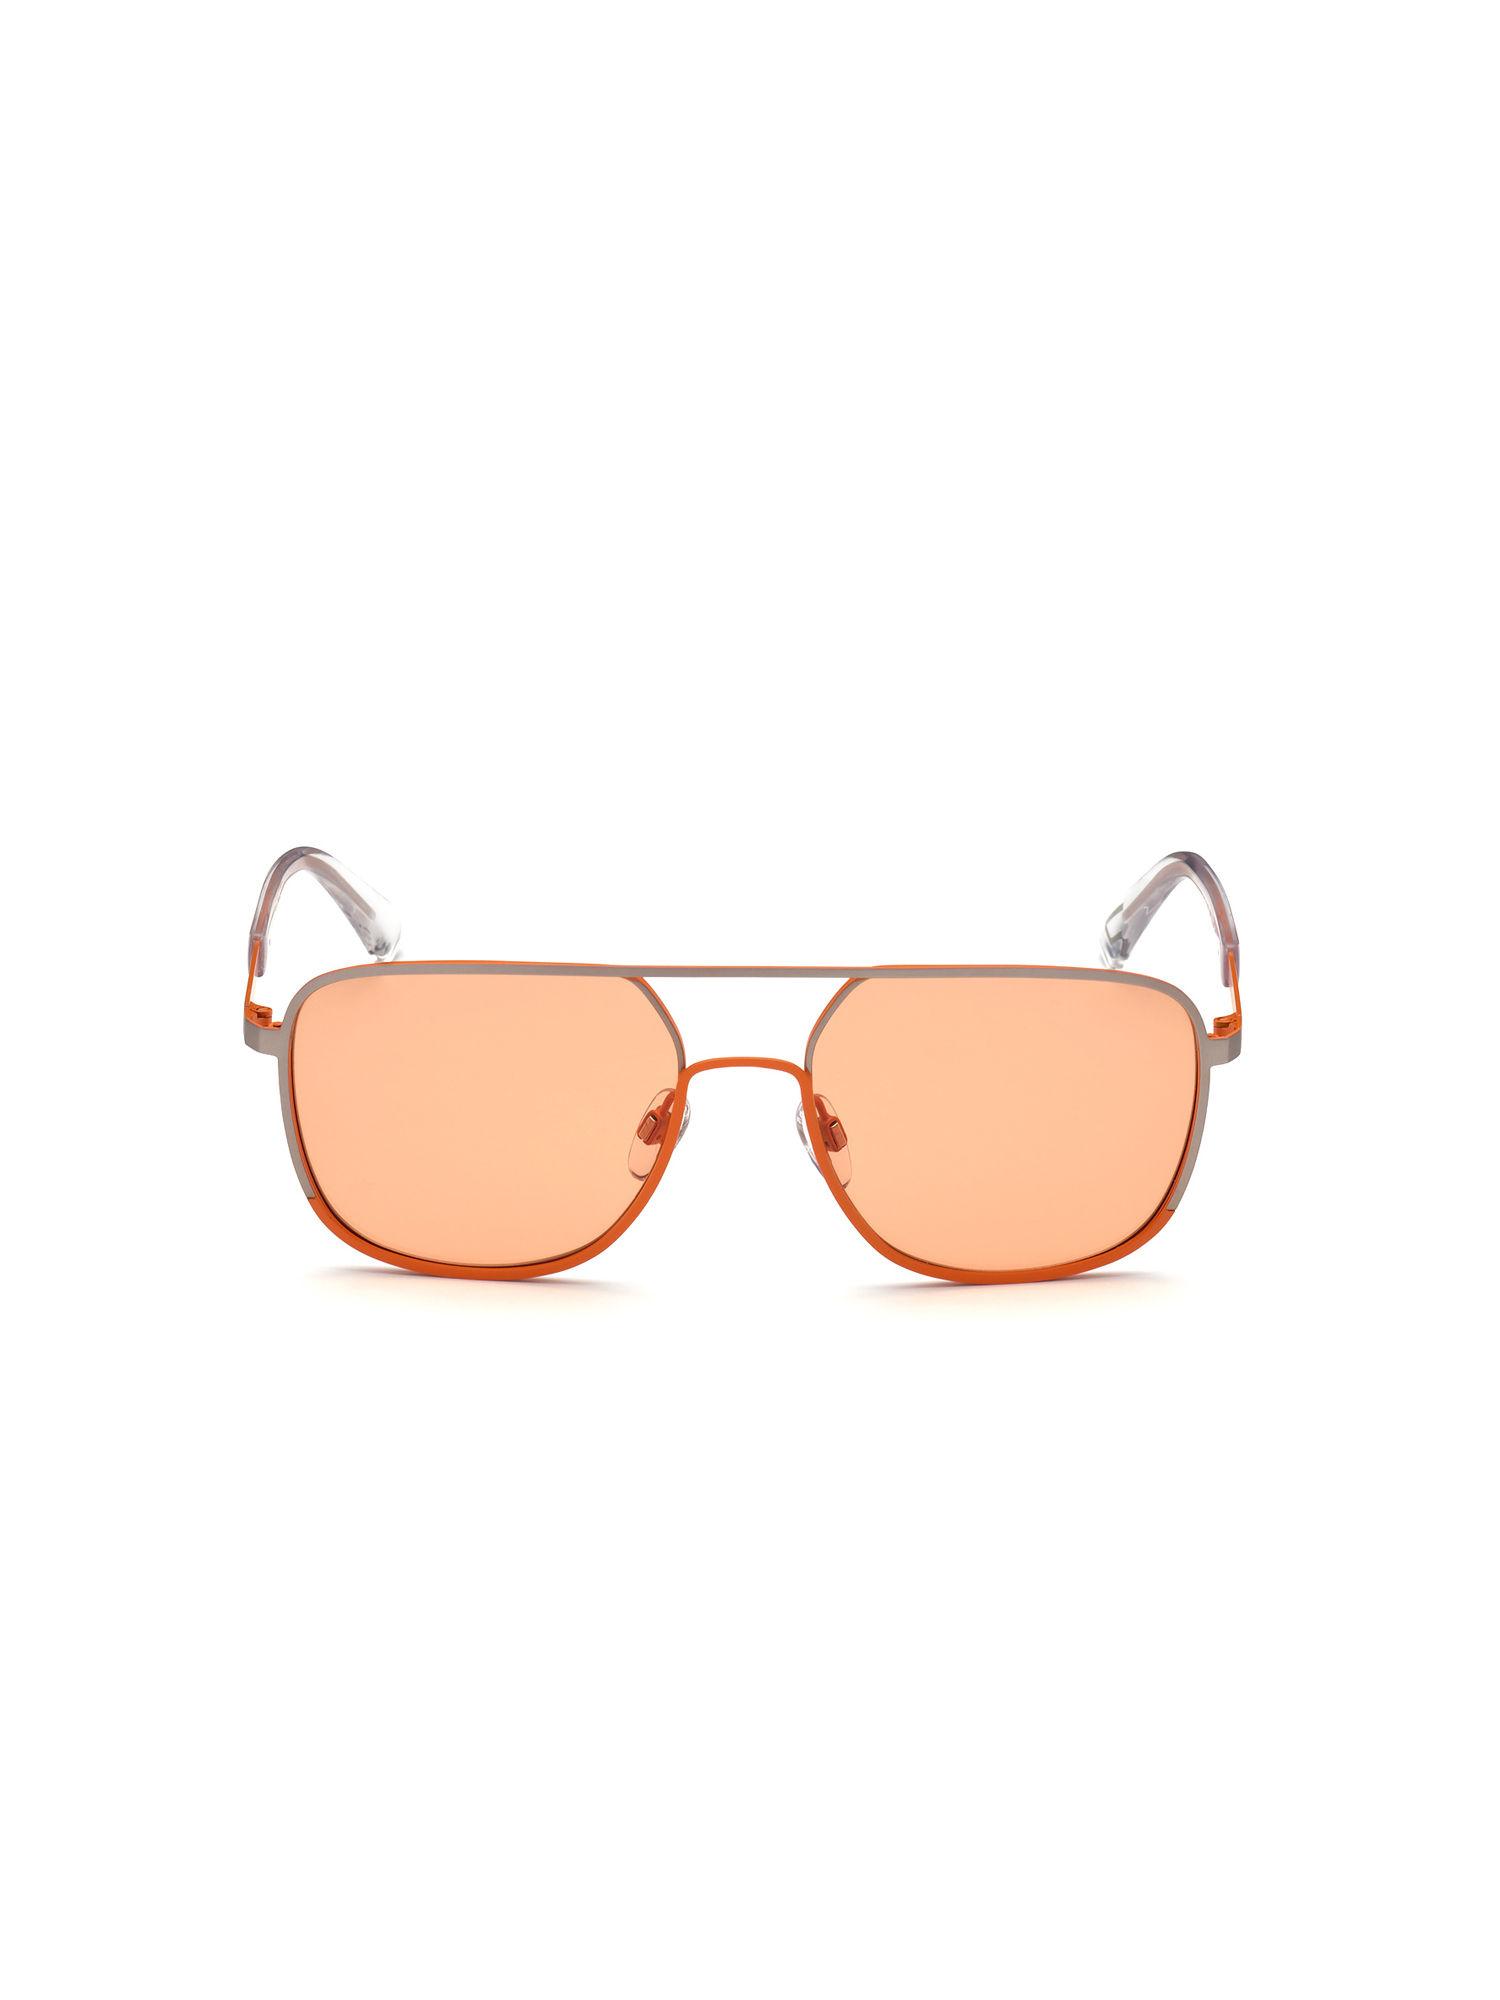 orange oval full rim sunglasses - dl0325 55 15e